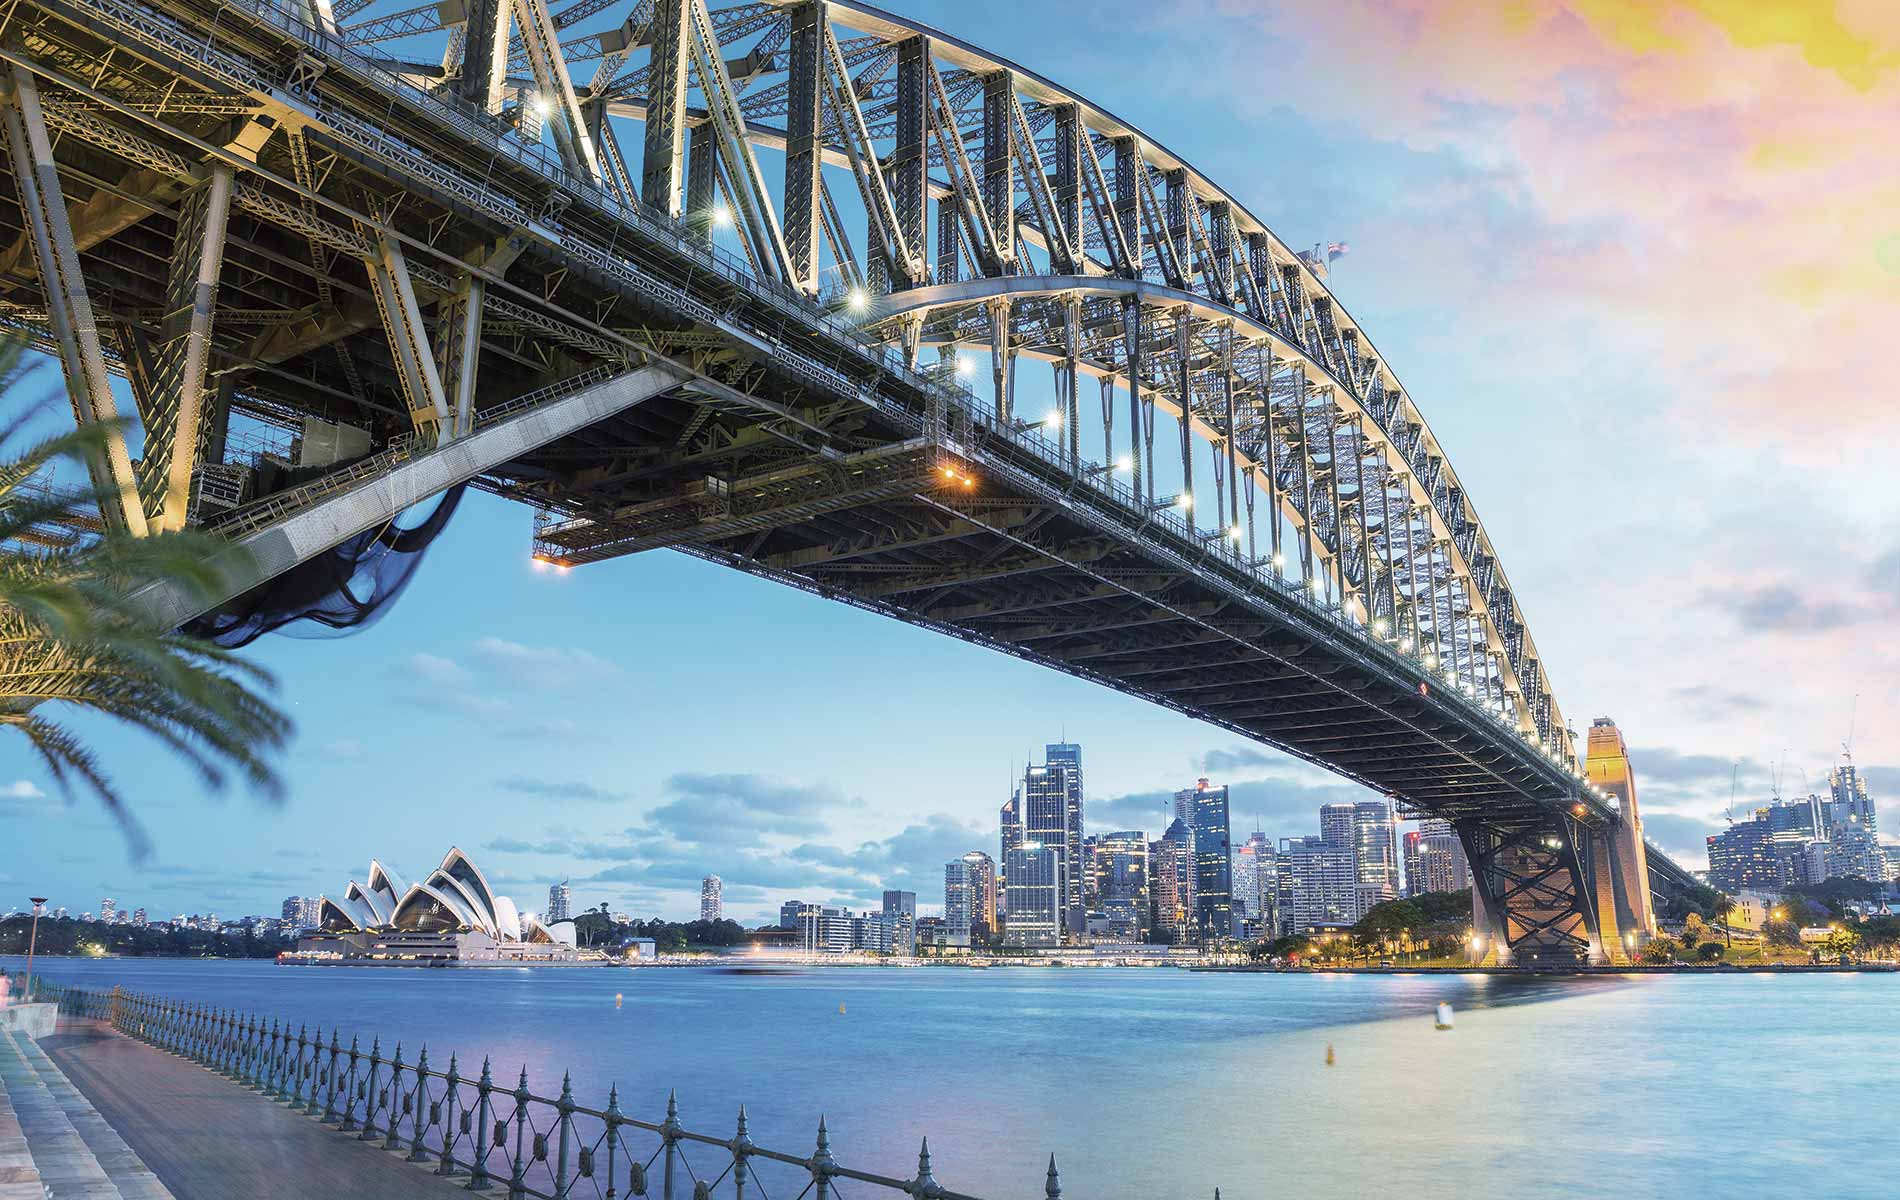 Sydney, Australia with the iconic Sydney Opera House and the Sydney Harbour Bridge Skylines of the World